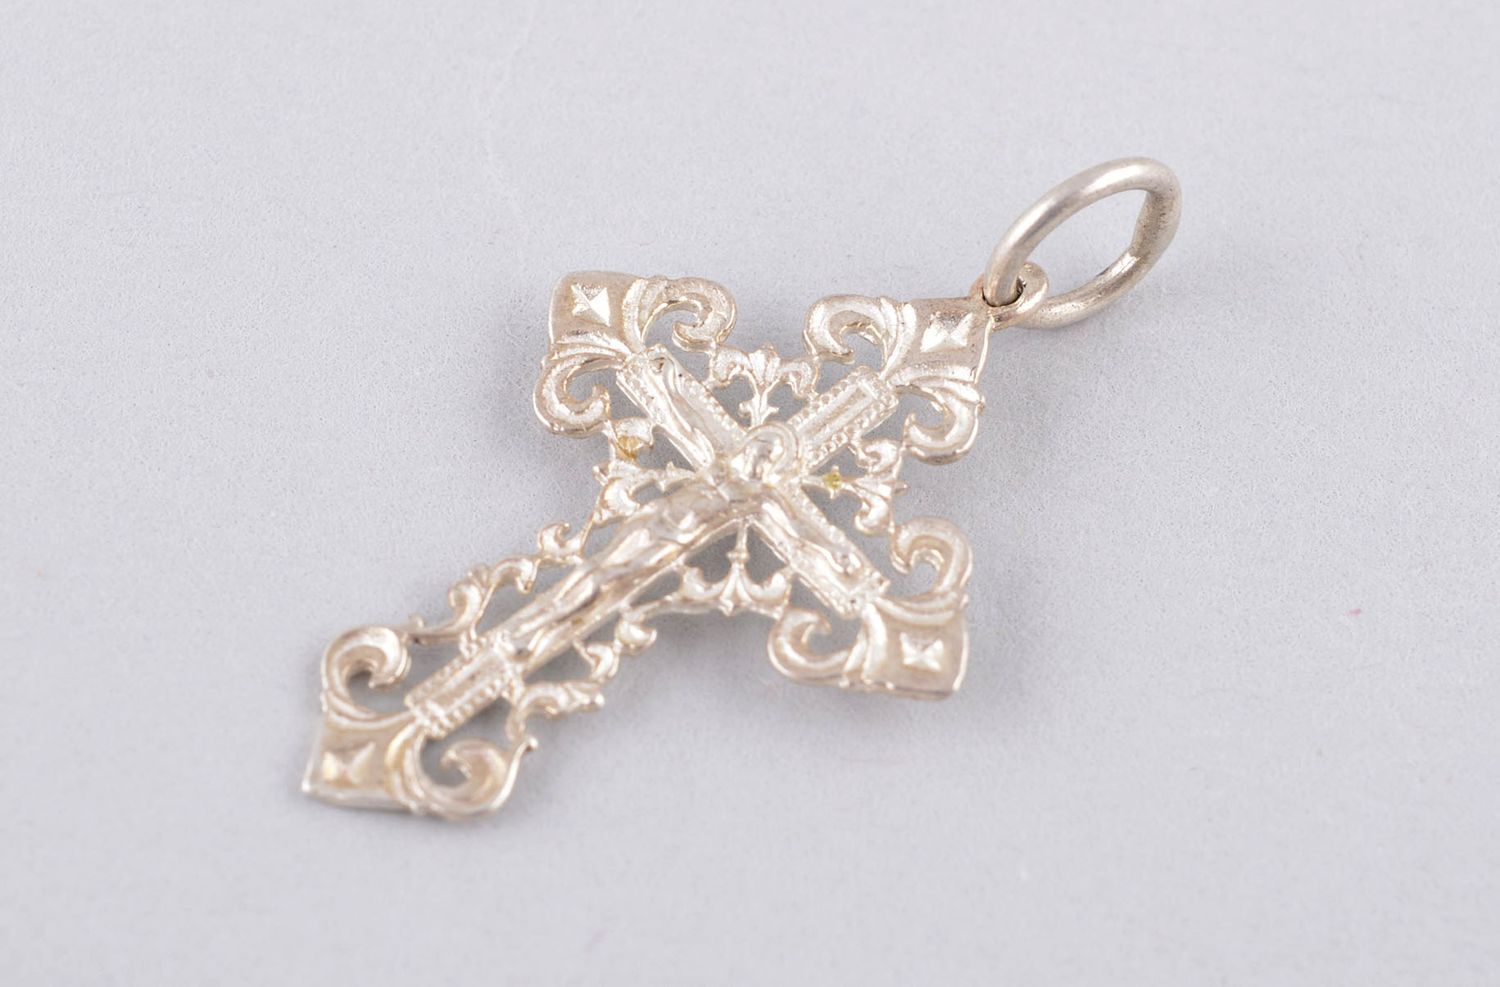 Handmade cross necklace bronze cross pendant necklace designer accessories photo 1